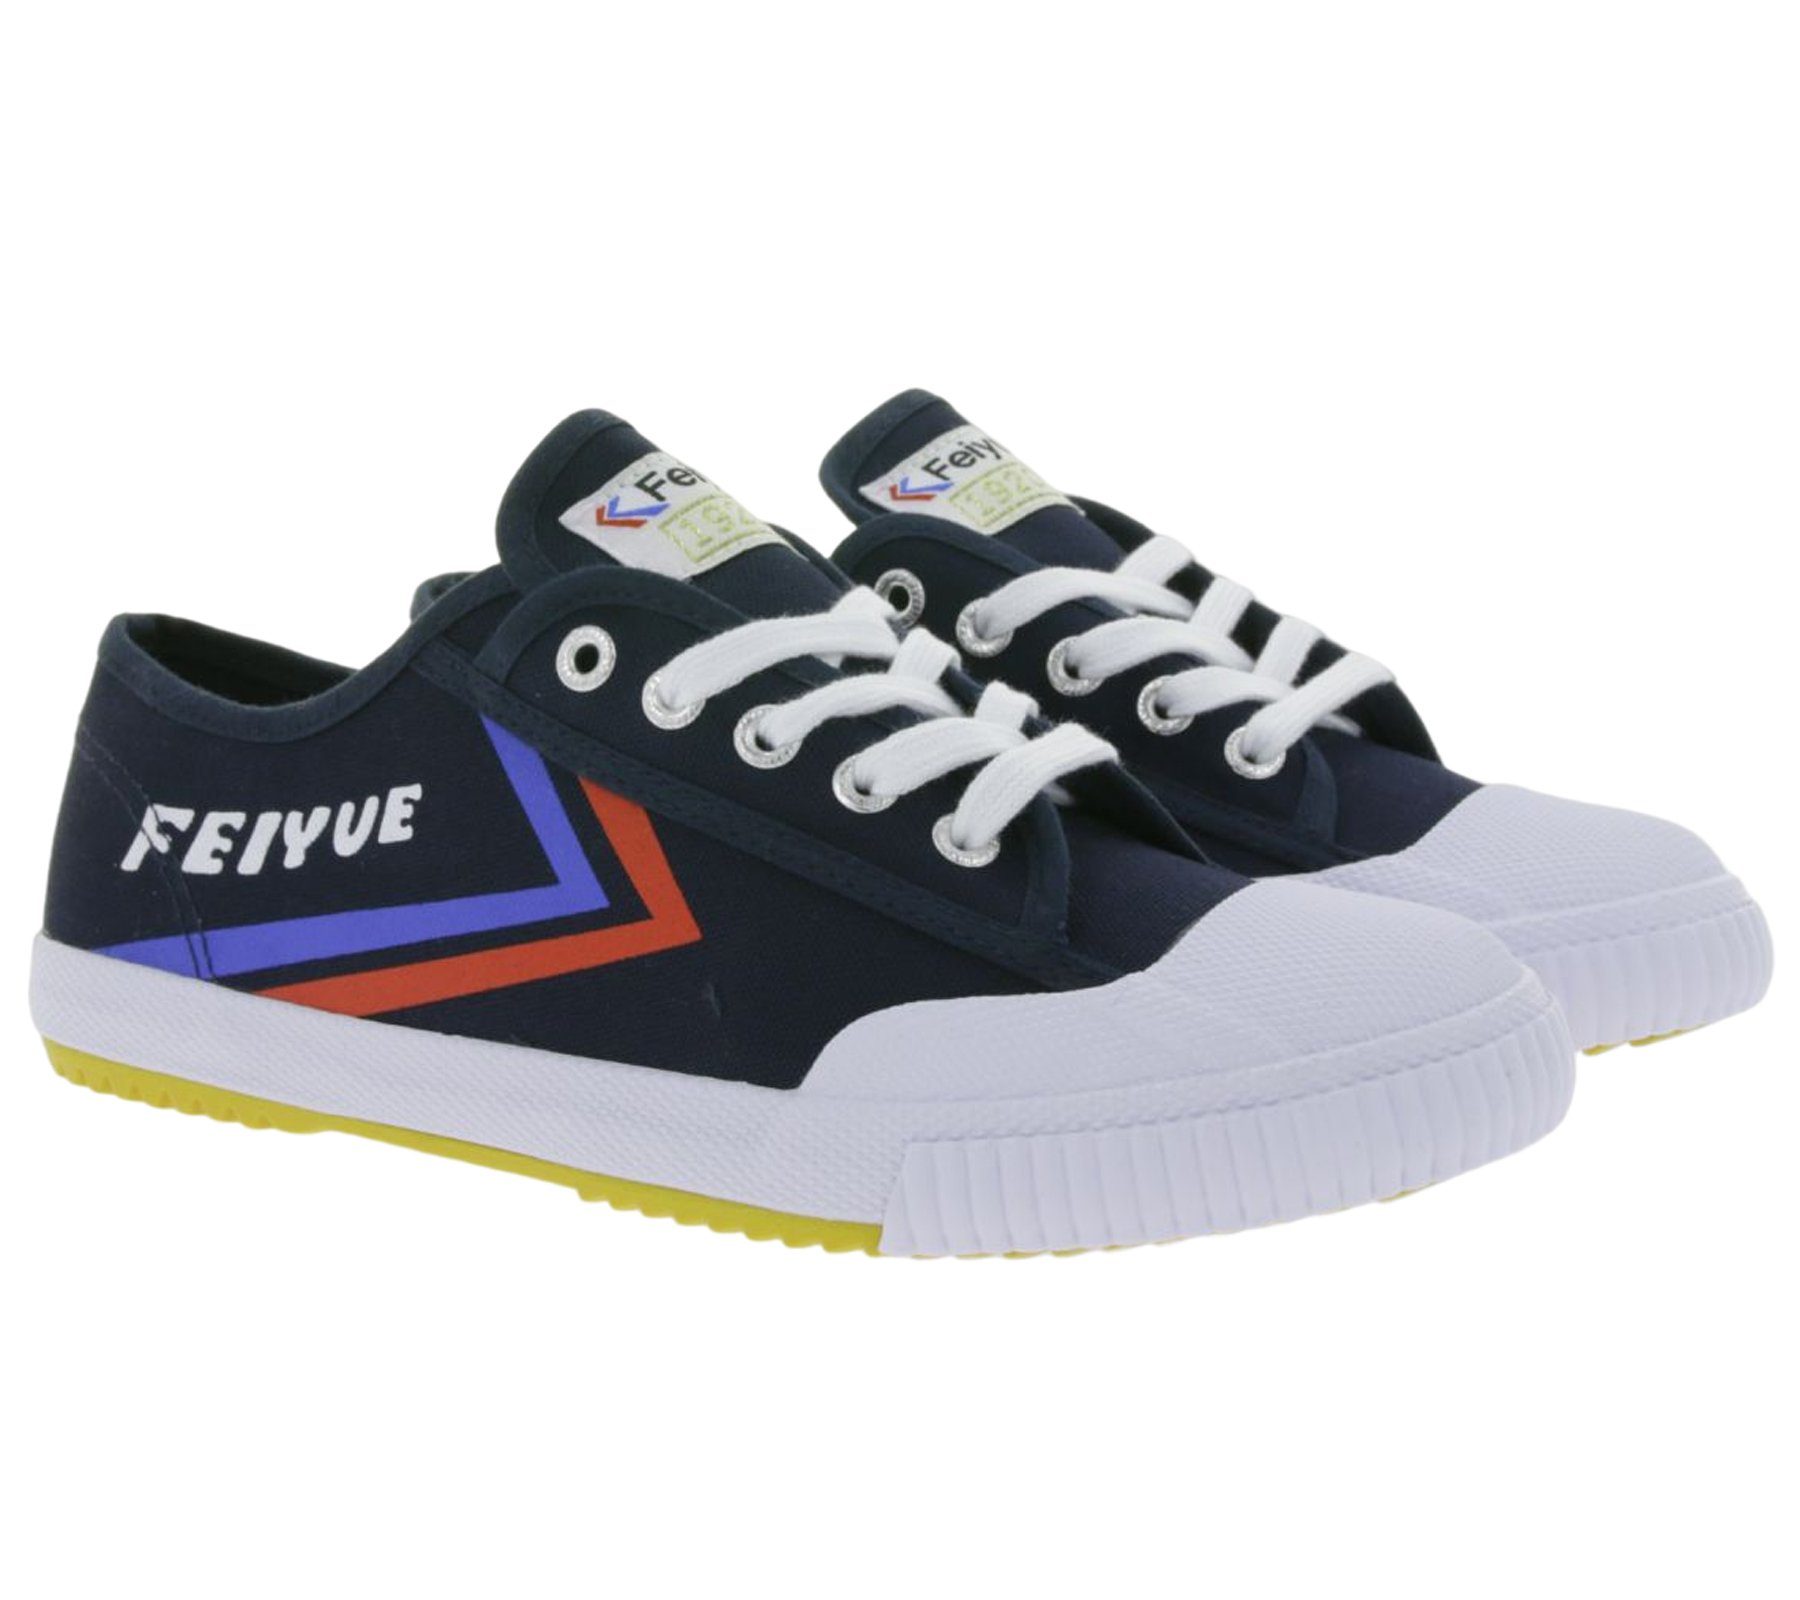 Feiyue Feiyue Canvas Sneaker für Navy-Blau in Sportschuhe Plimsoll-Design Kampfkunst Fitness-Schuhe Lo Fe 1920 Sneaker